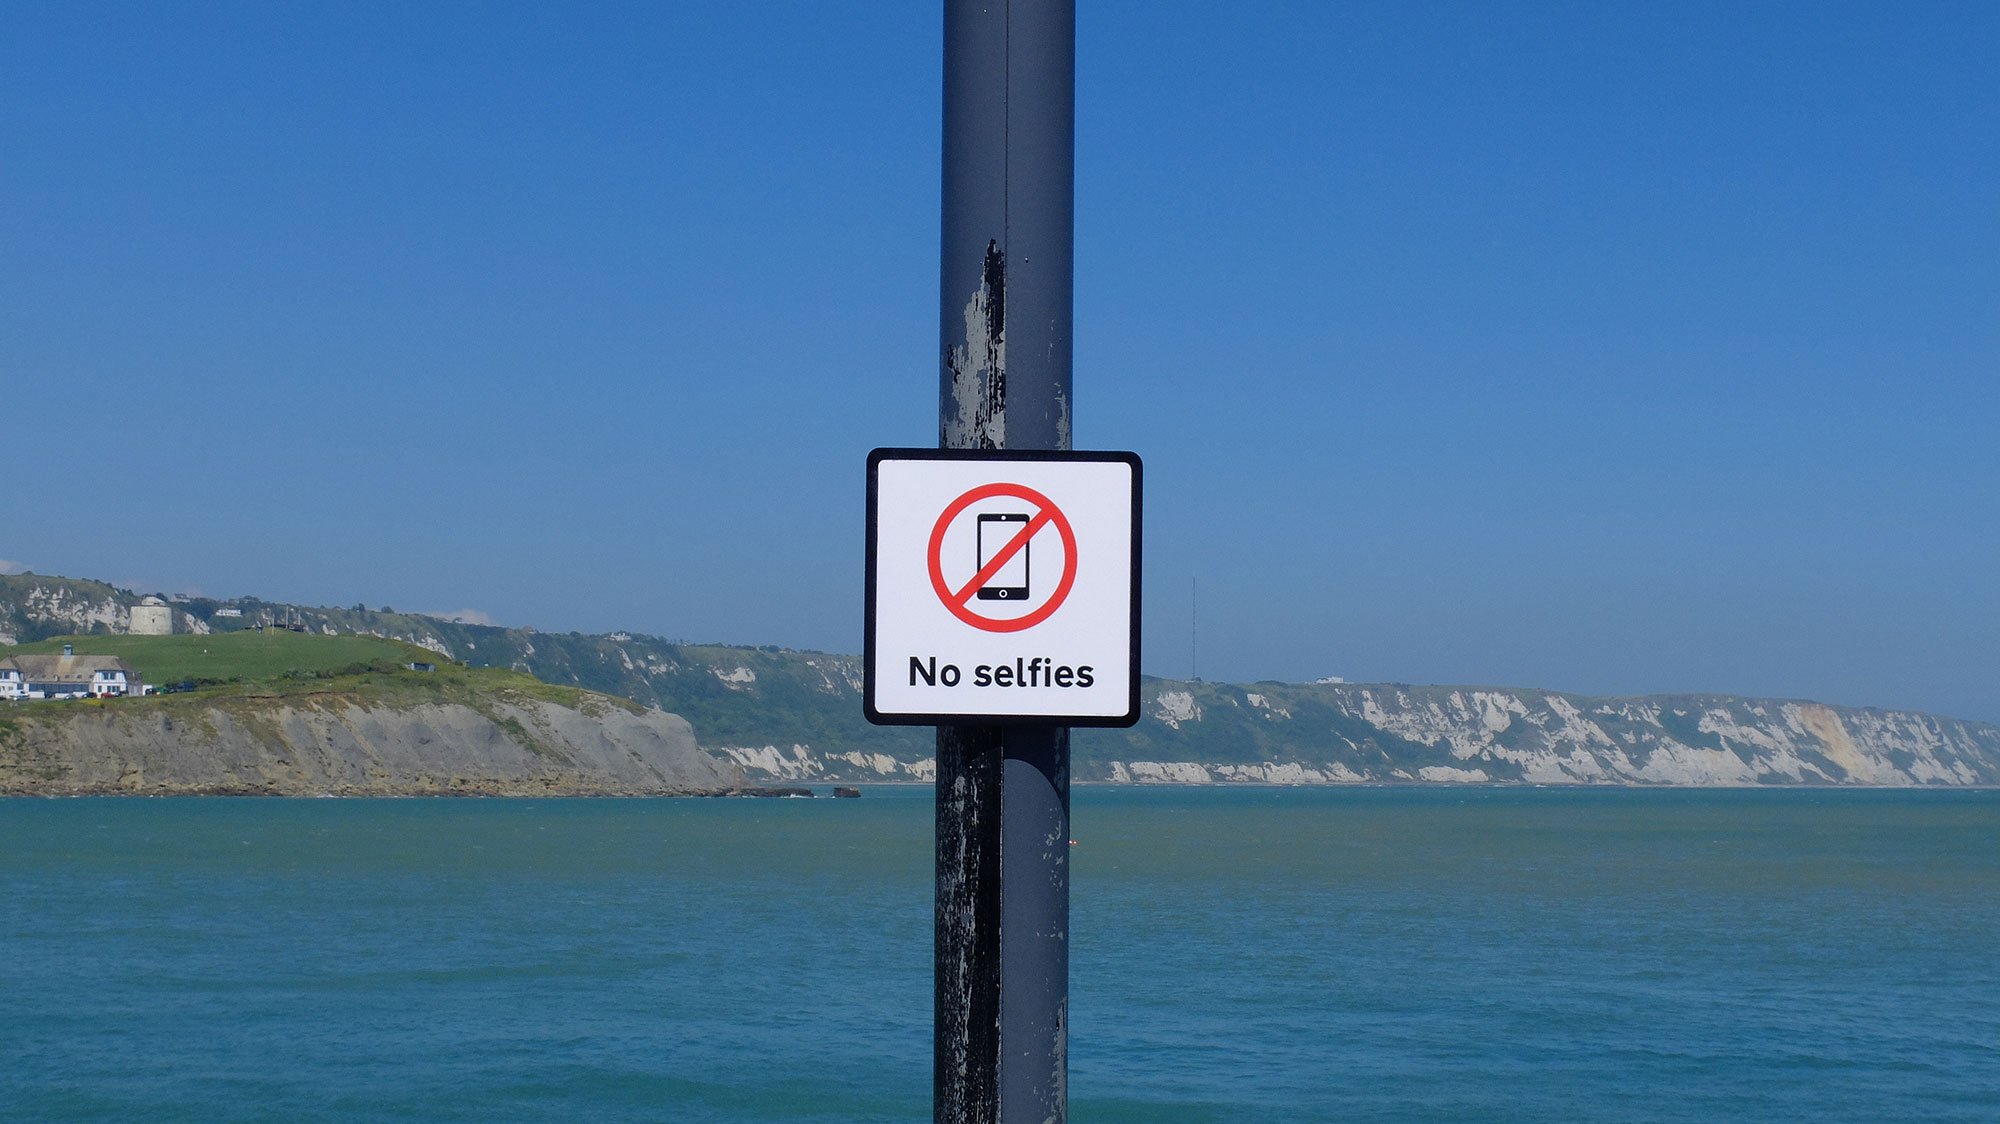 #022 - No selfies